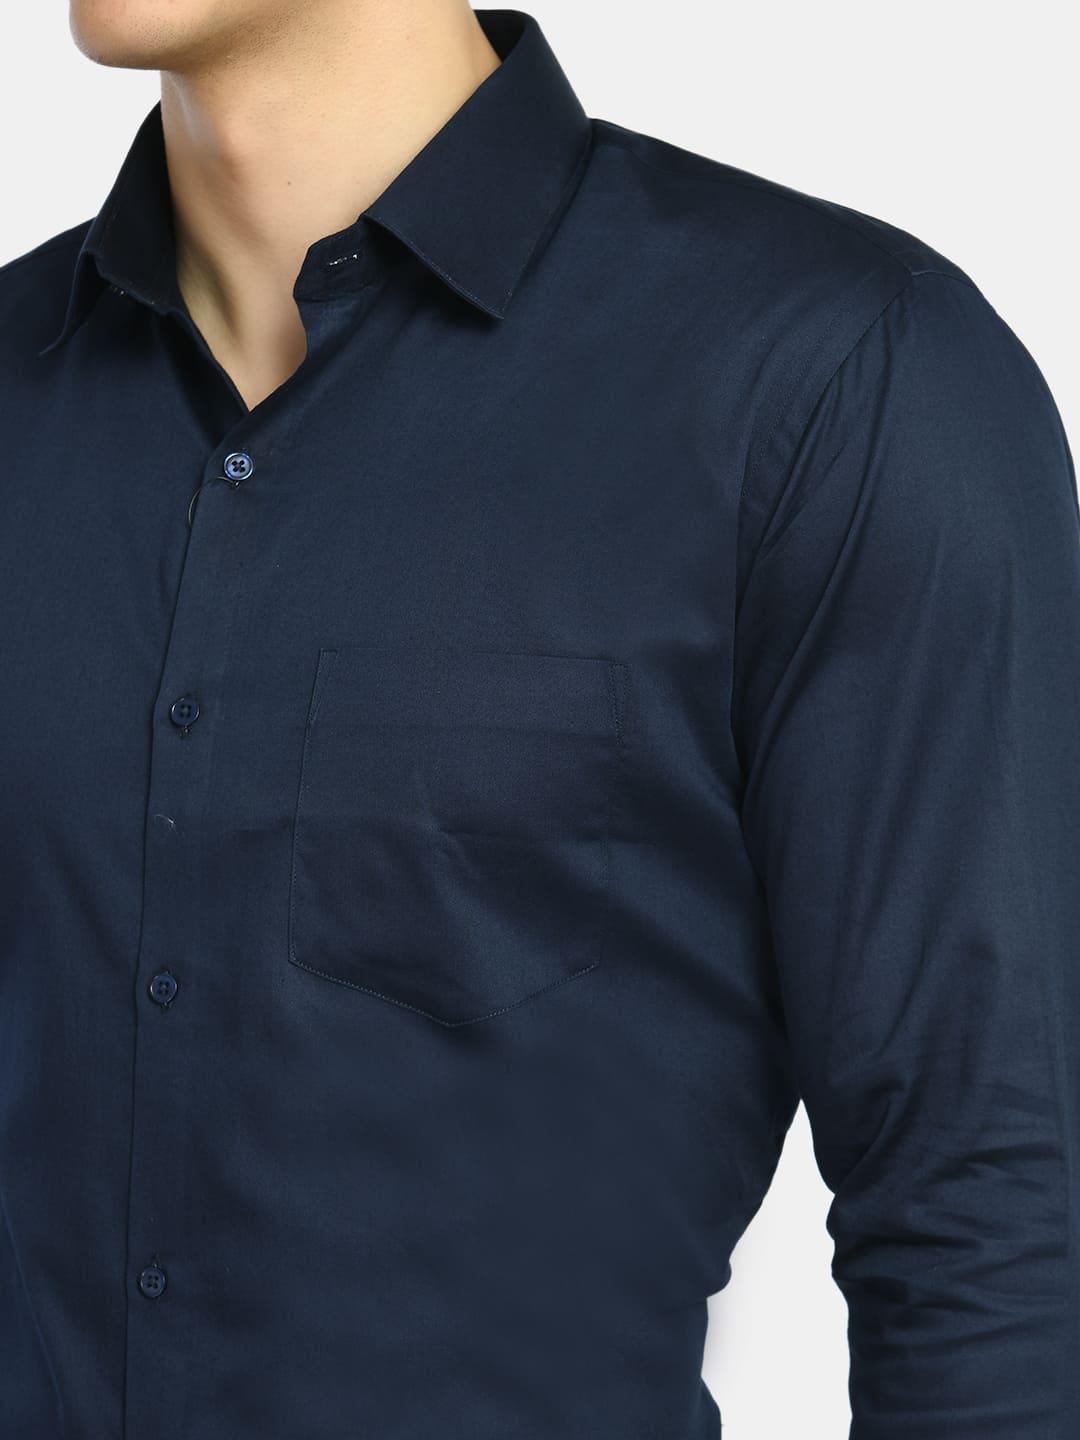 Men's Navy Spread Collar Solid Giza Cotton Formal Shirt